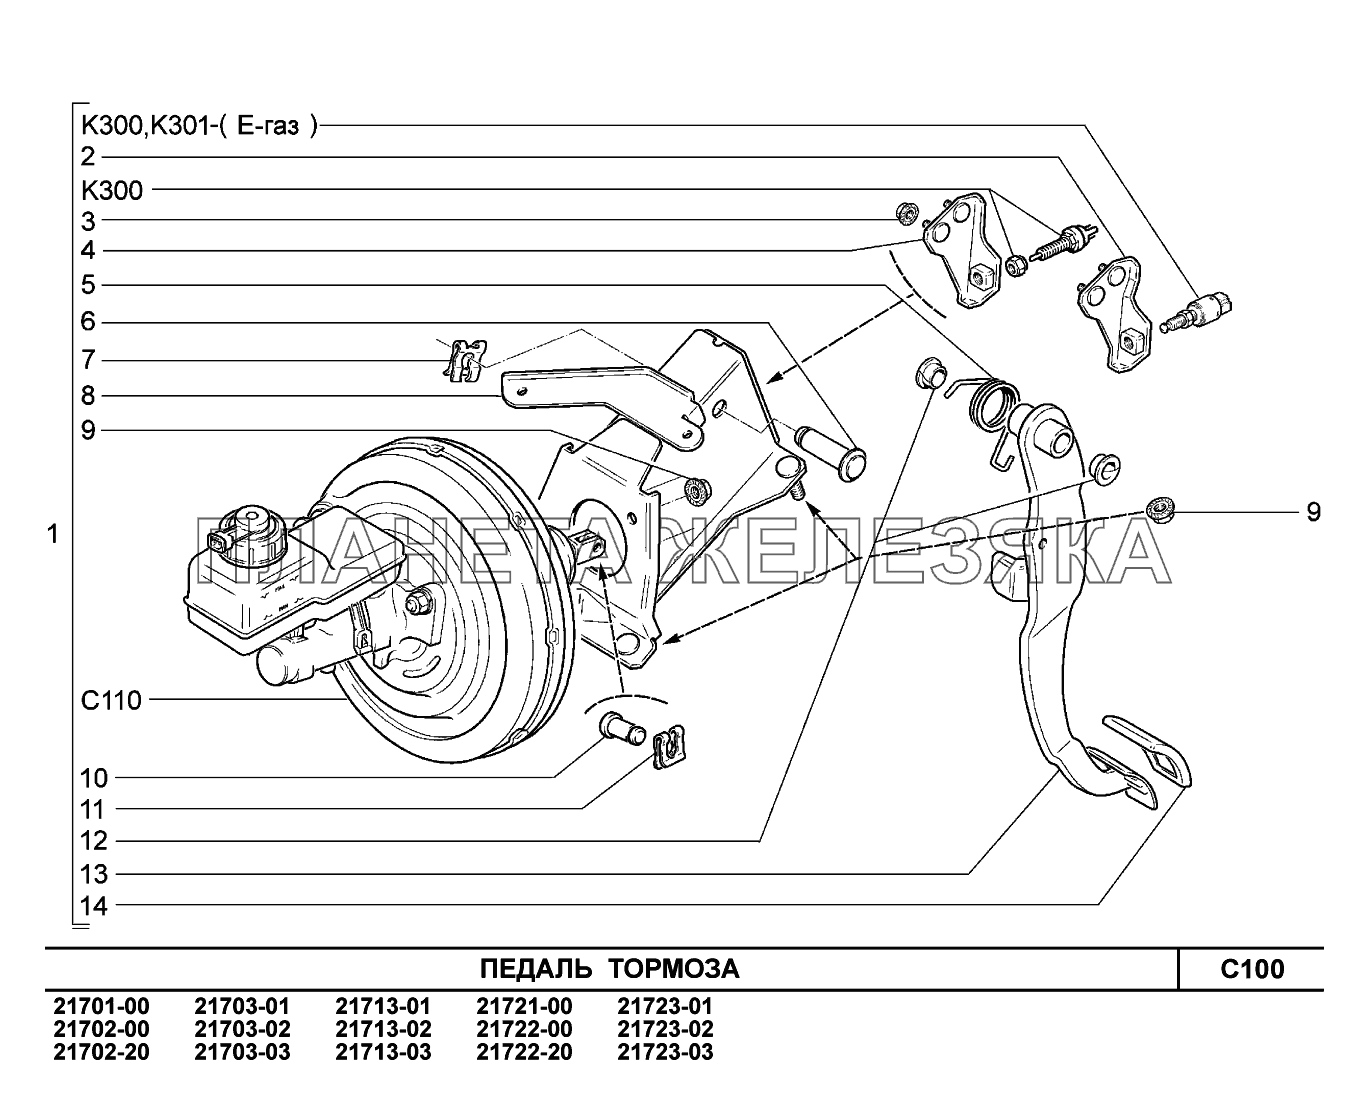 C100. Педаль тормоза ВАЗ-2170 